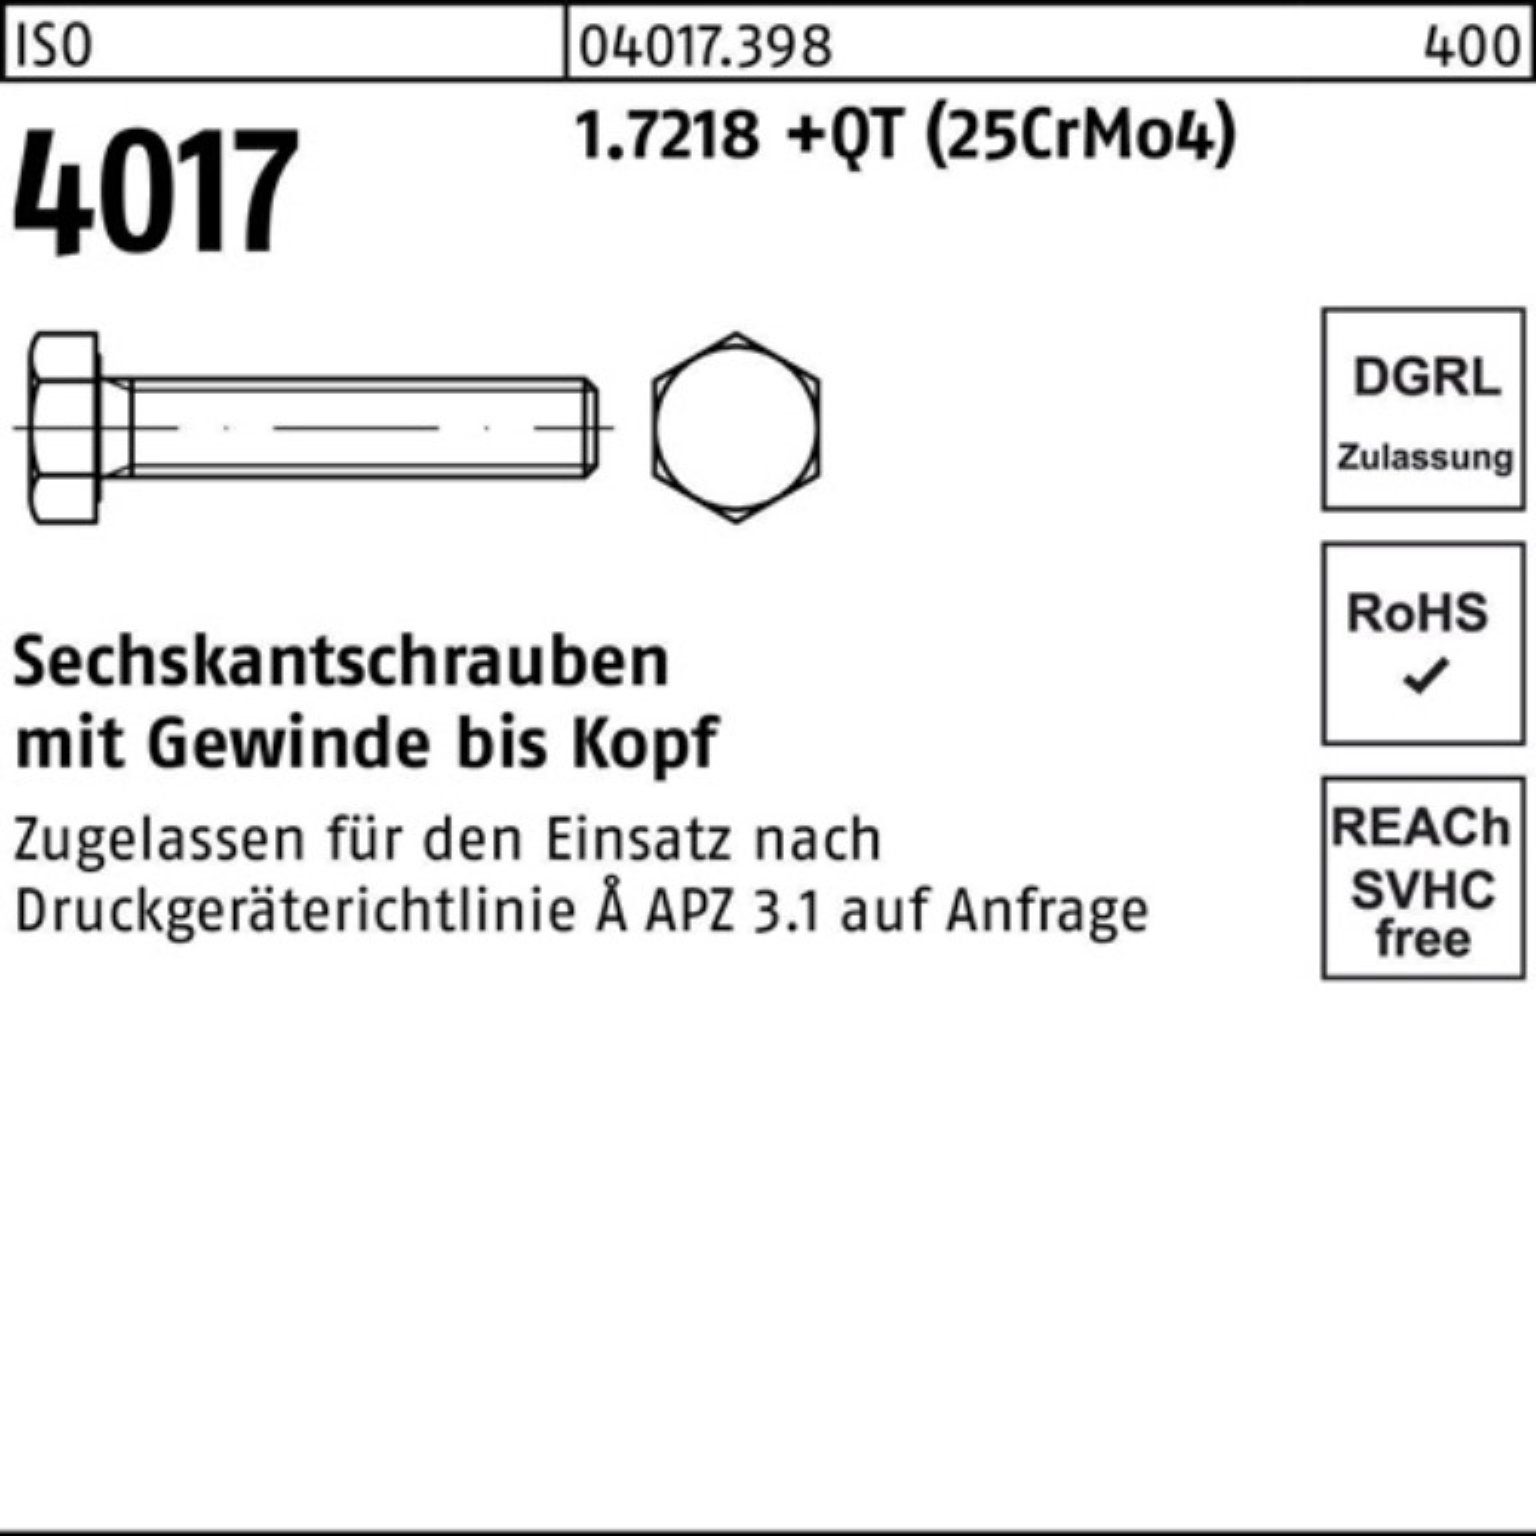 Bufab Sechskantschraube 100er Pack Sechskantschraube +QT VG 90 M33x ISO (25CrMo4) 4017 1.7218